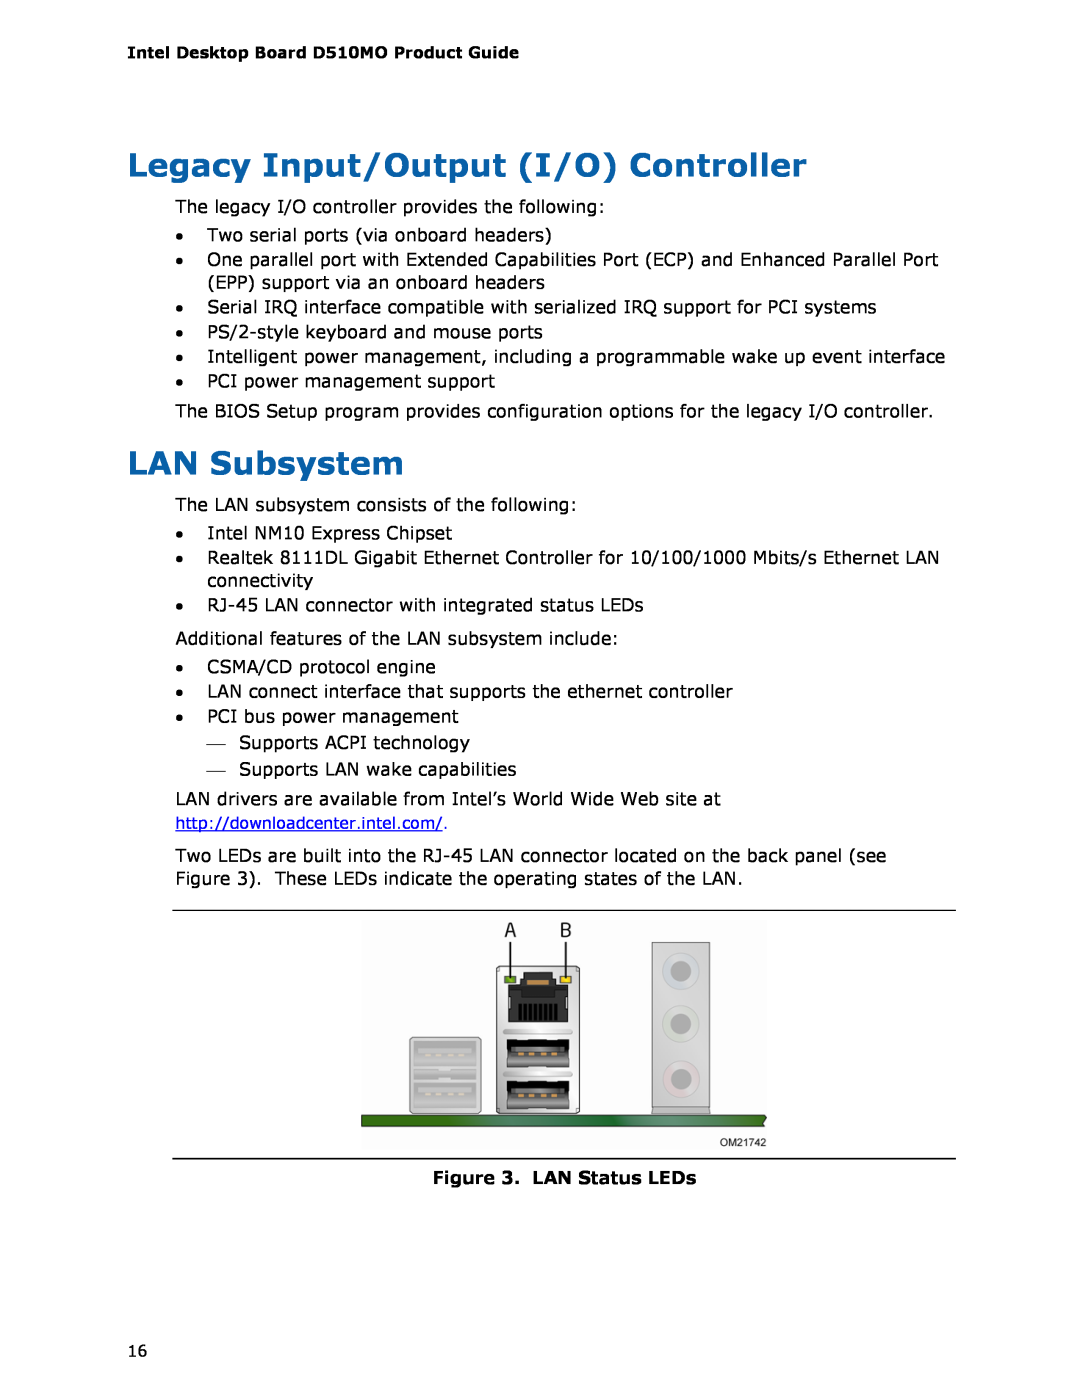 Intel D510MO manual Legacy Input/Output I/O Controller, LAN Subsystem, LAN Status LEDs 